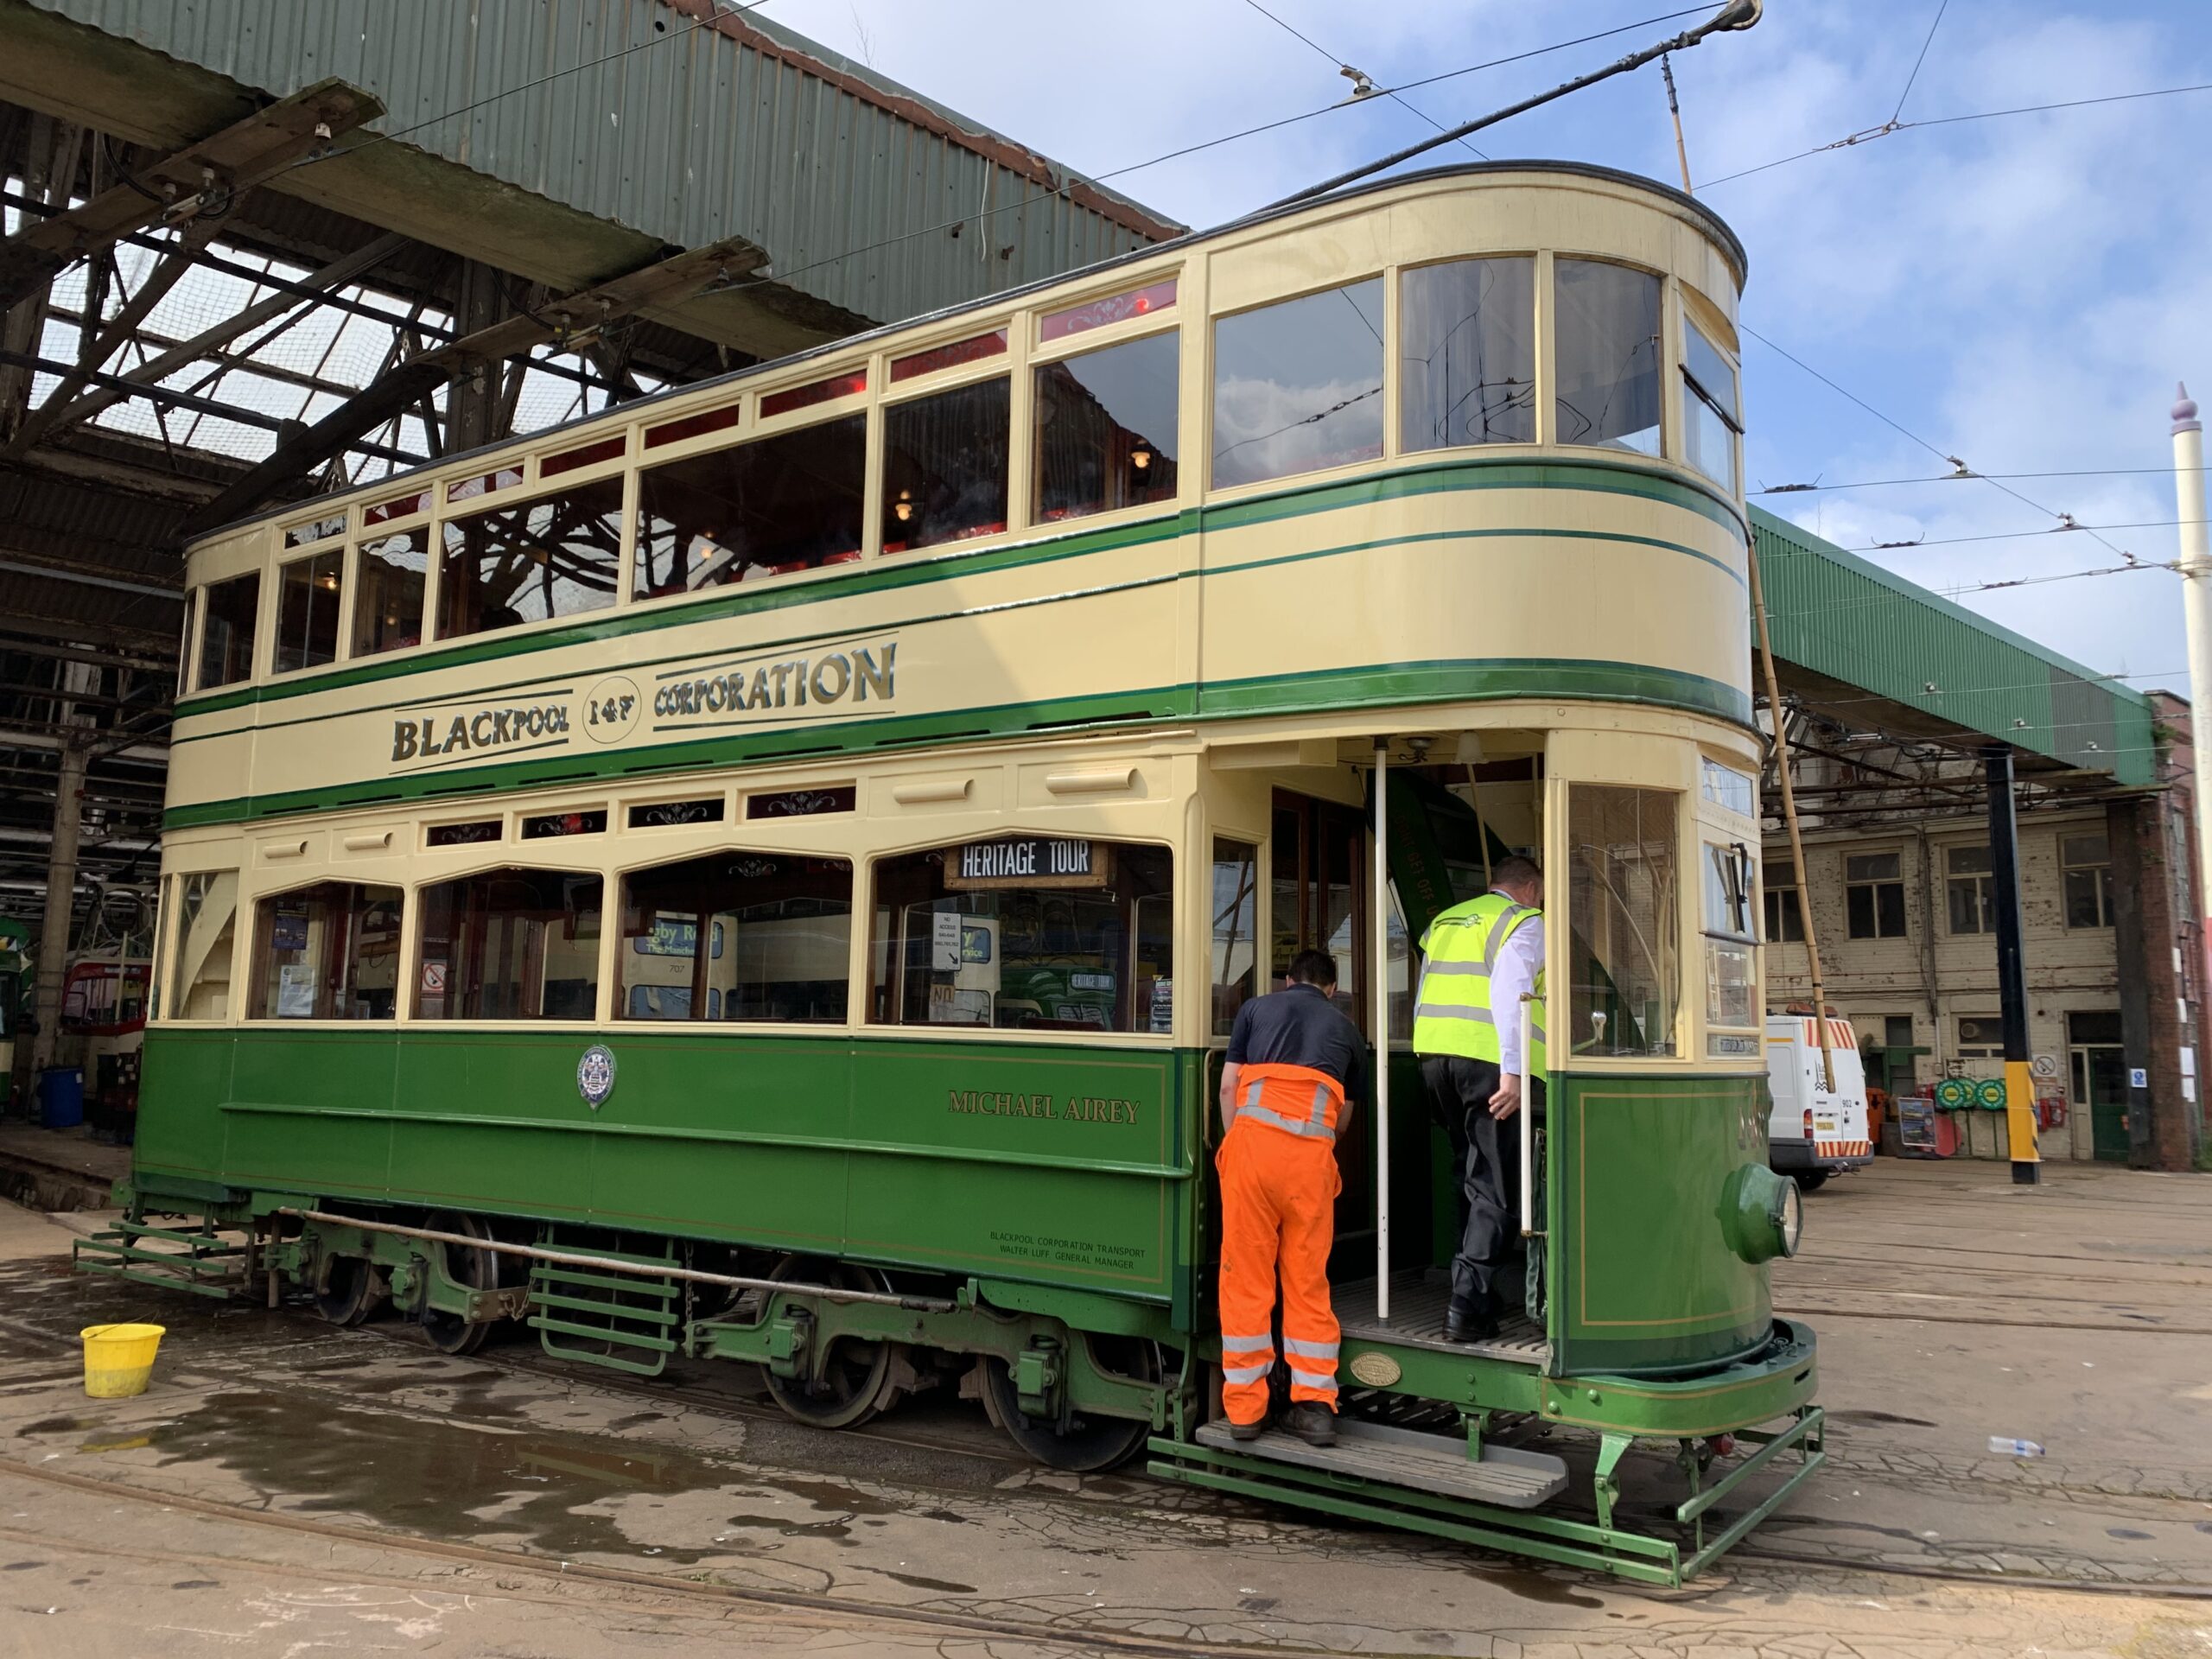 Blackpool Tramtown Heritage Tram Museum